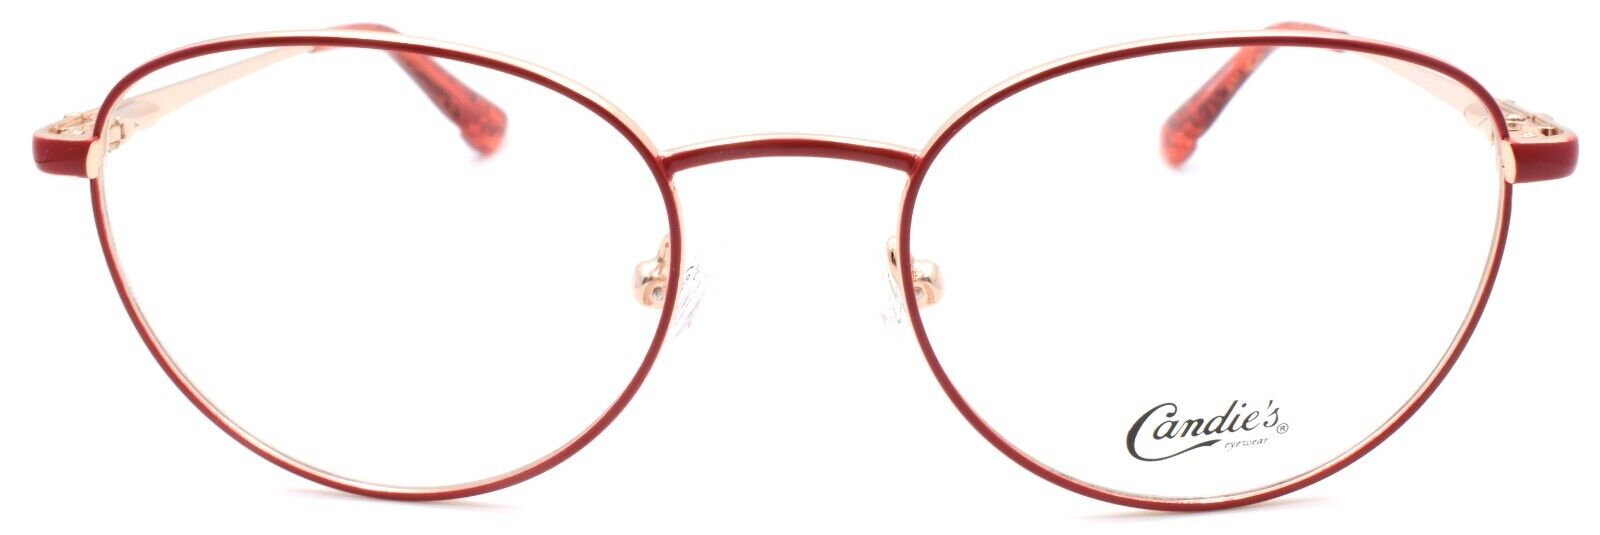 2-Candies CA0168 066 Women's Eyeglasses Frames 50-18-135 Shiny Red-889214032713-IKSpecs